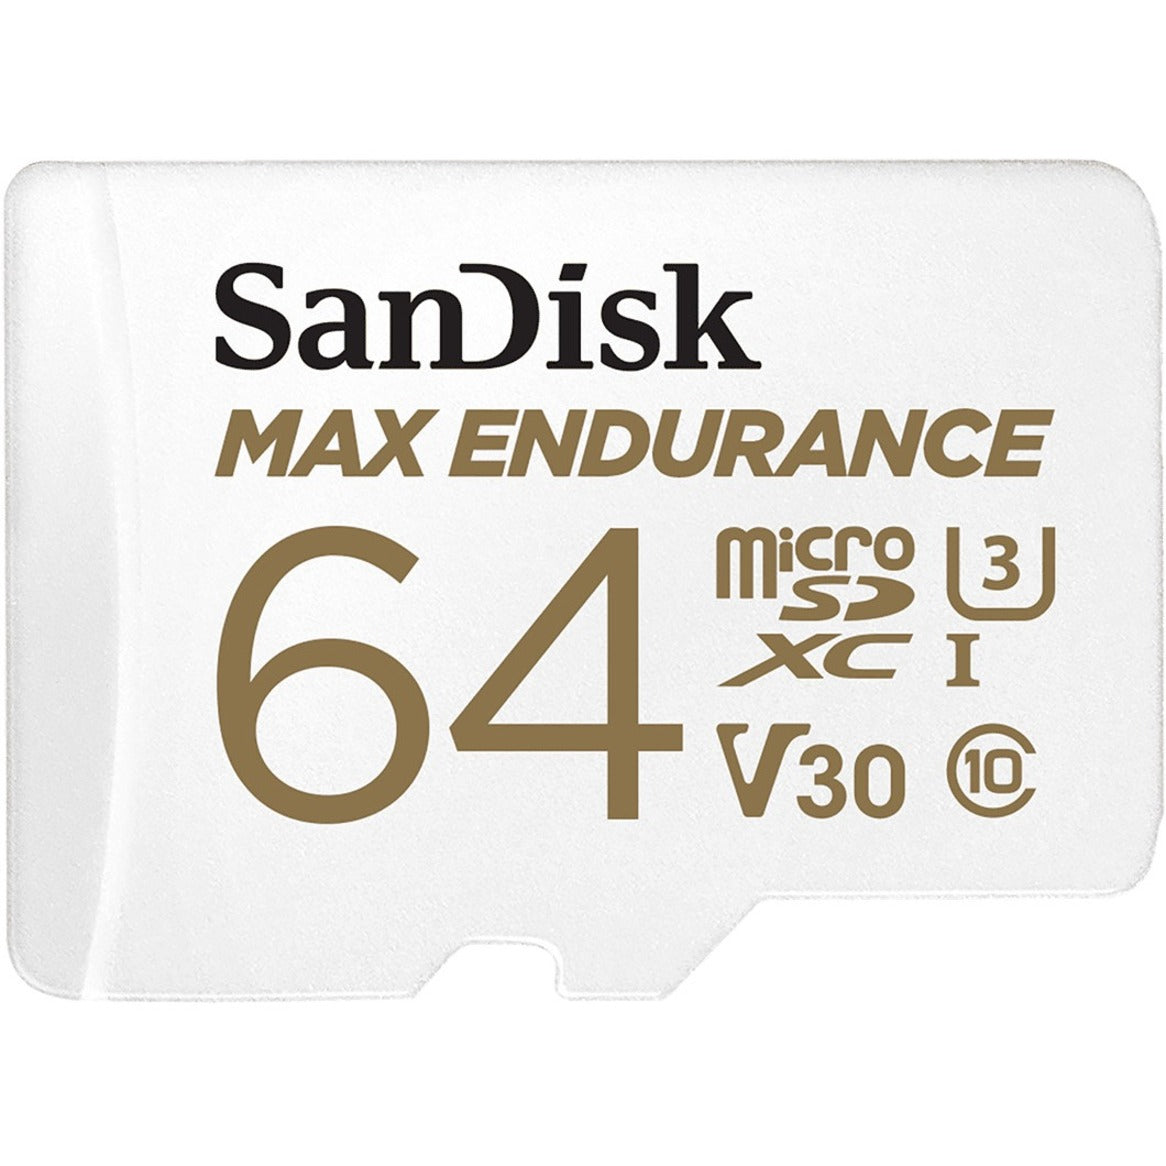 SanDisk SDSQQVR-064G-AN6IA MAX ENDURANCE microSD Card, 64GB, 100MB/s Read Speed, 40MB/s Write Speed